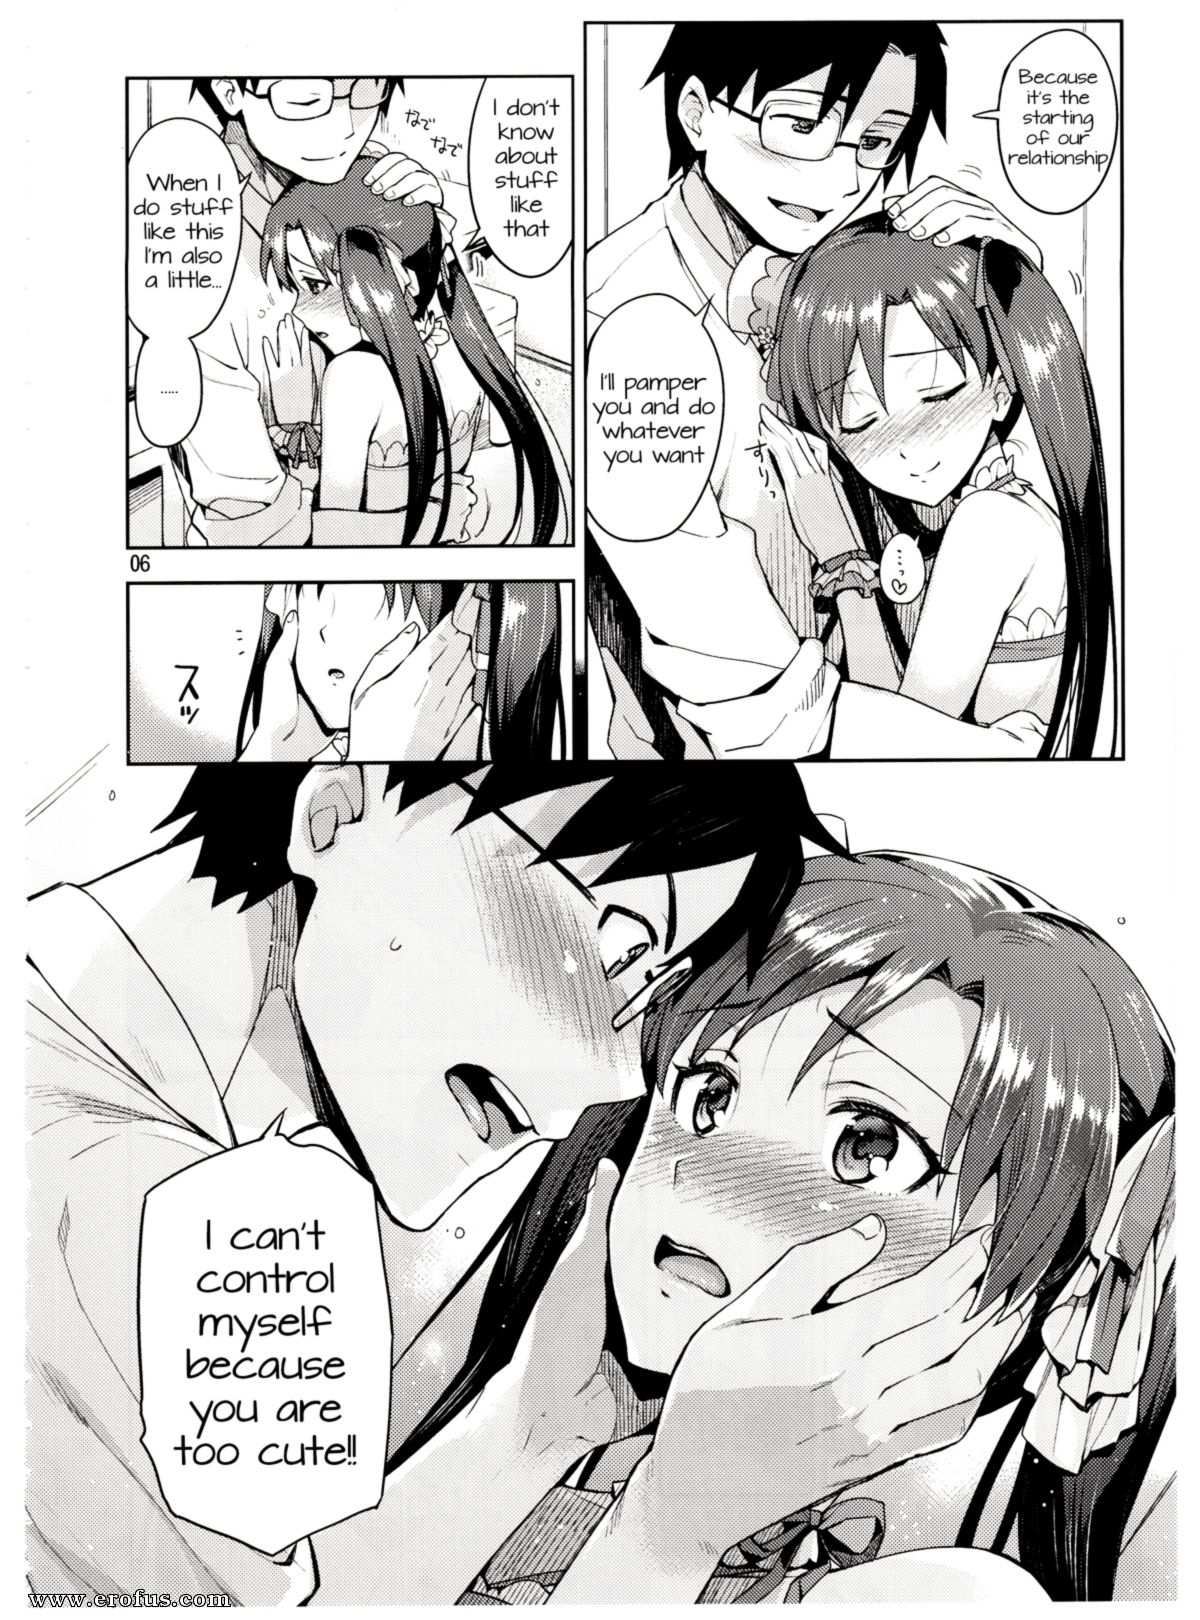 Manga Smoking Anime Porn - Page 5 | hentai-and-manga-english/redrop-miyamoto-smoke/i-cant-control-myself-because-chihaya-is-too-cute  | Erofus - Sex and Porn Comics